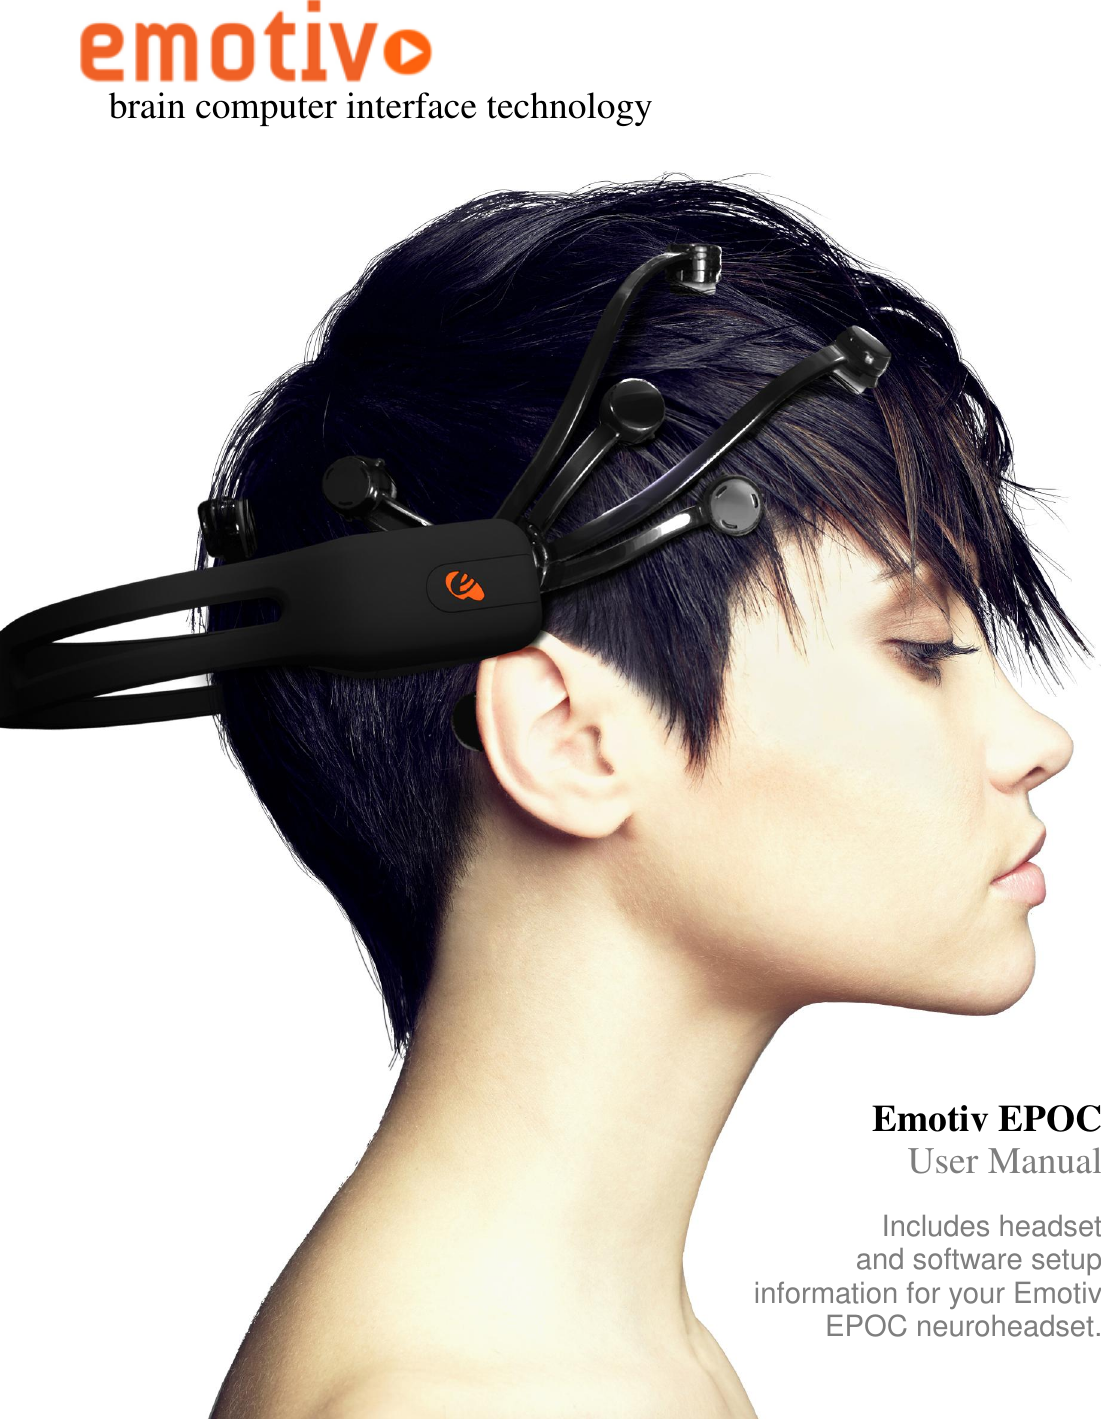     Includes headset  and software setup information for your Emotiv EPOC neuroheadset. Emotiv EPOC User Manual  brain computer interface technology 